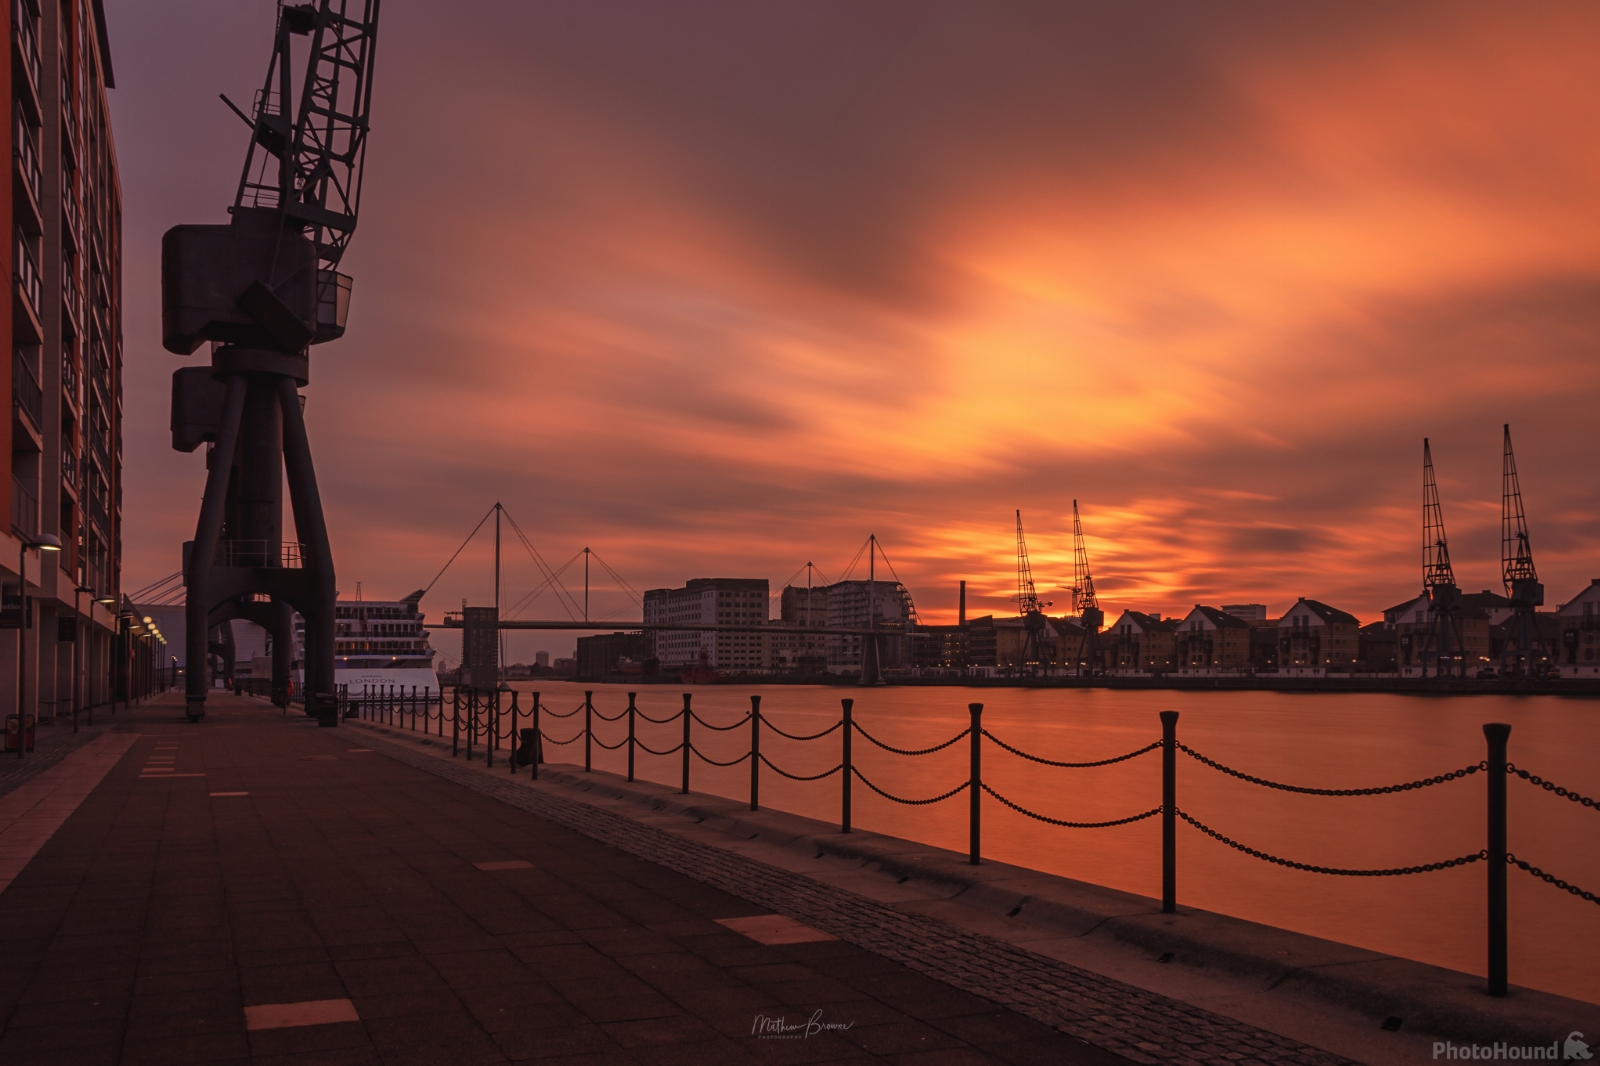 Image of Royal Victoria Docks by Mathew Browne